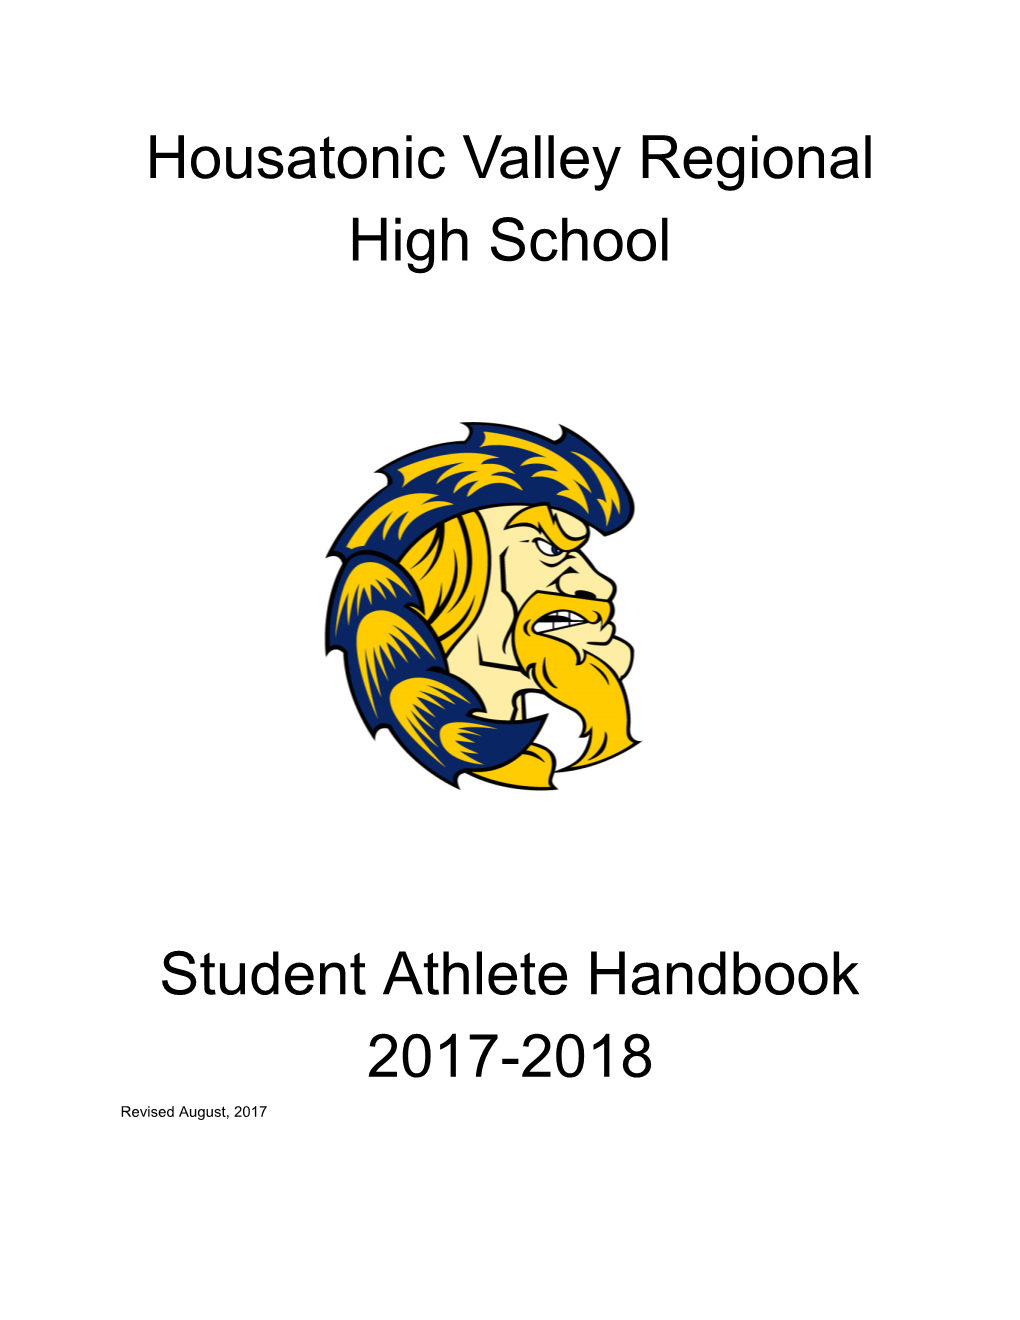 Housatonic Valley Regional High School Student Athlete Handbook